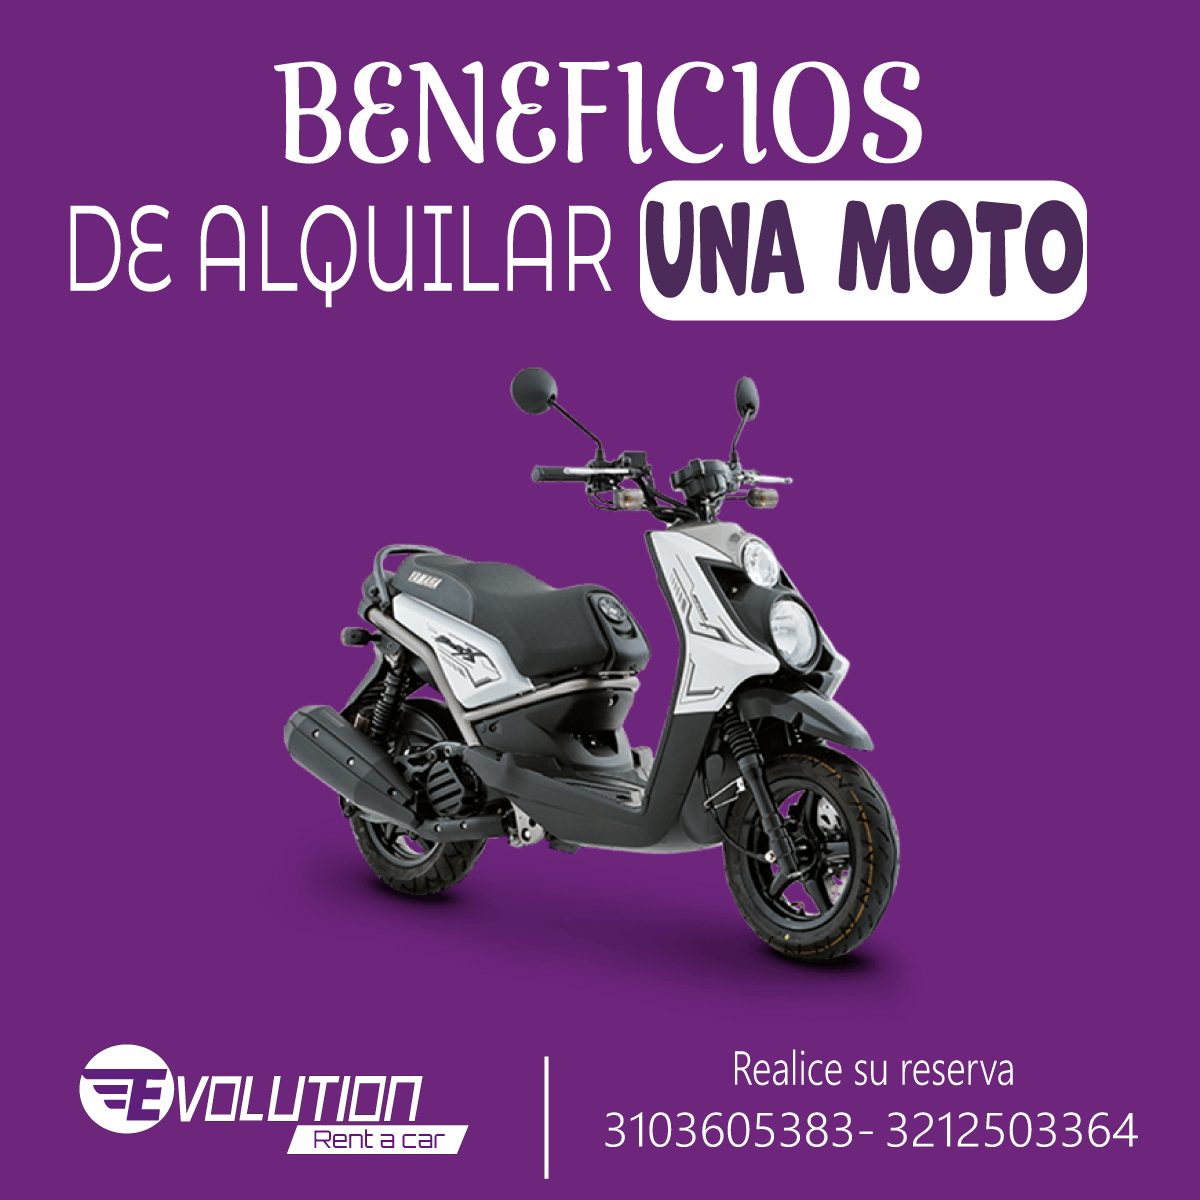 Alquiler de Motos en Rionegro – Evolution Rent a Car